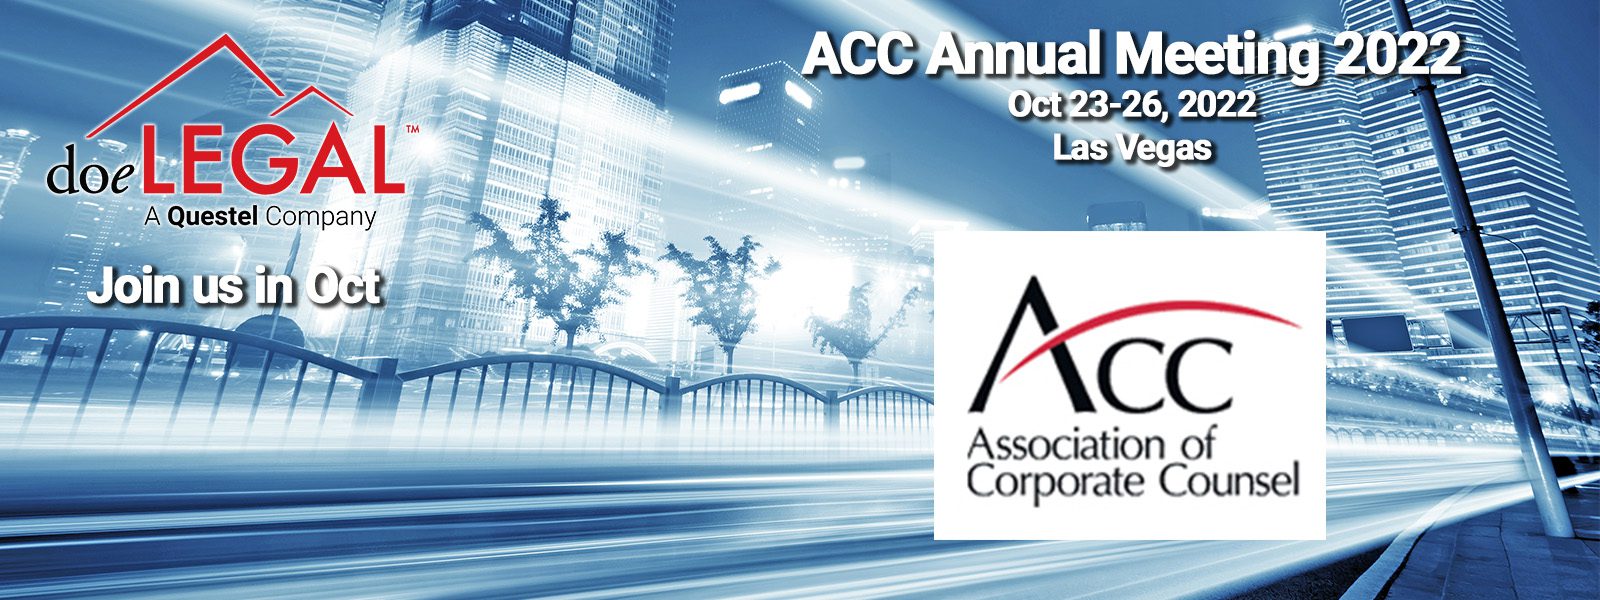 2022-ACC-Annual-Meeting